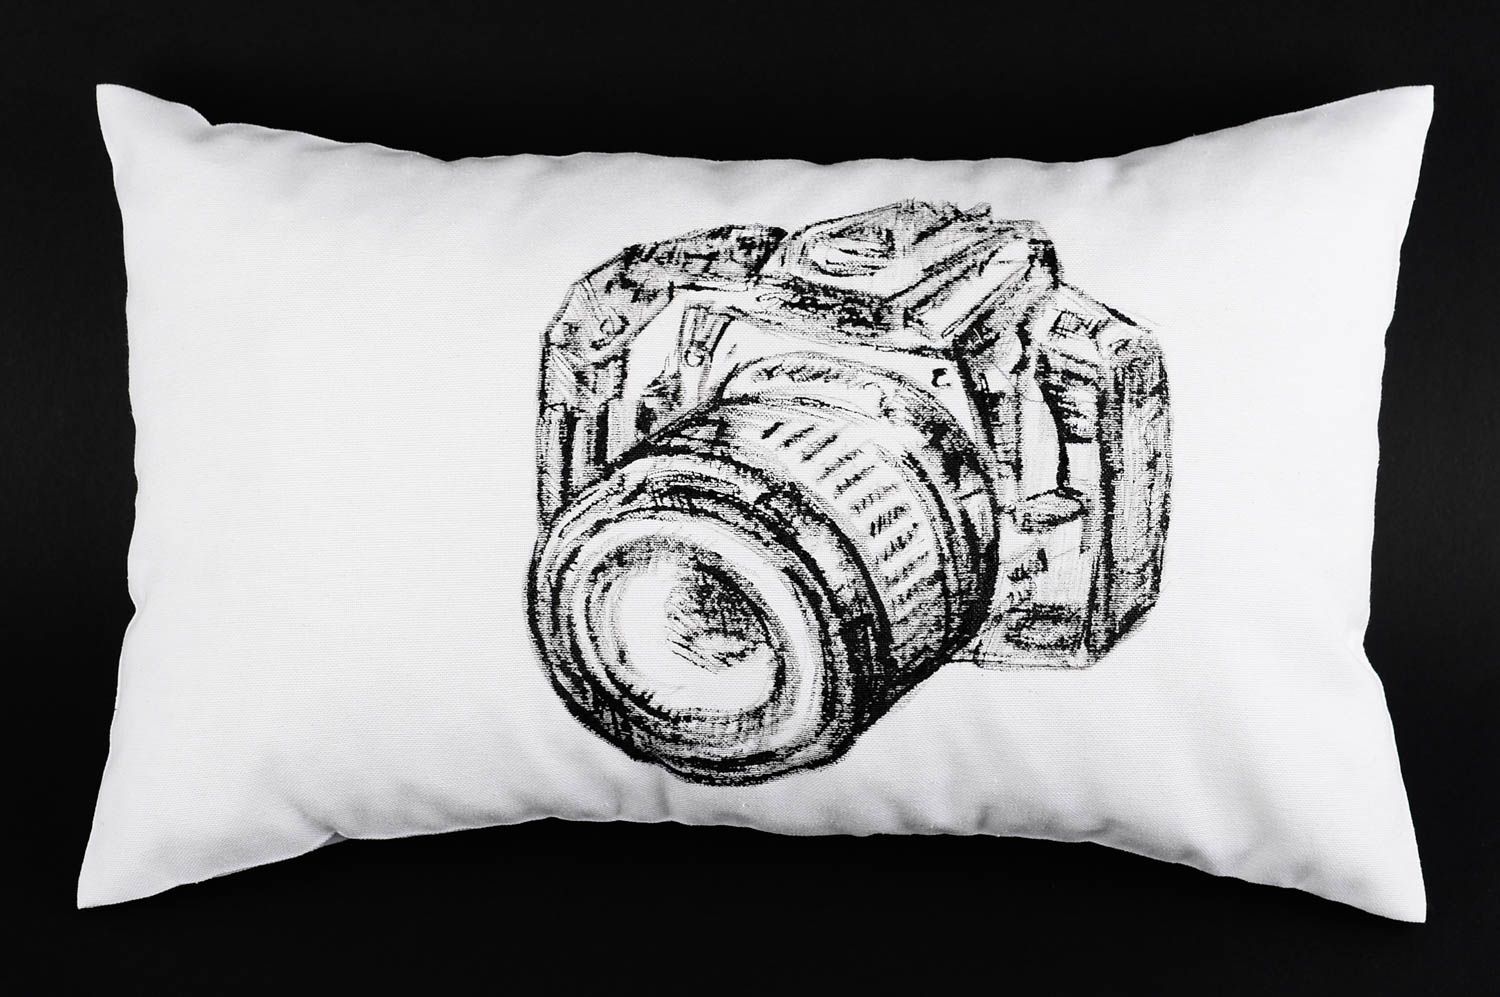 Unusual handmade soft cushion throw pillow design interior decorating gift ideas photo 1